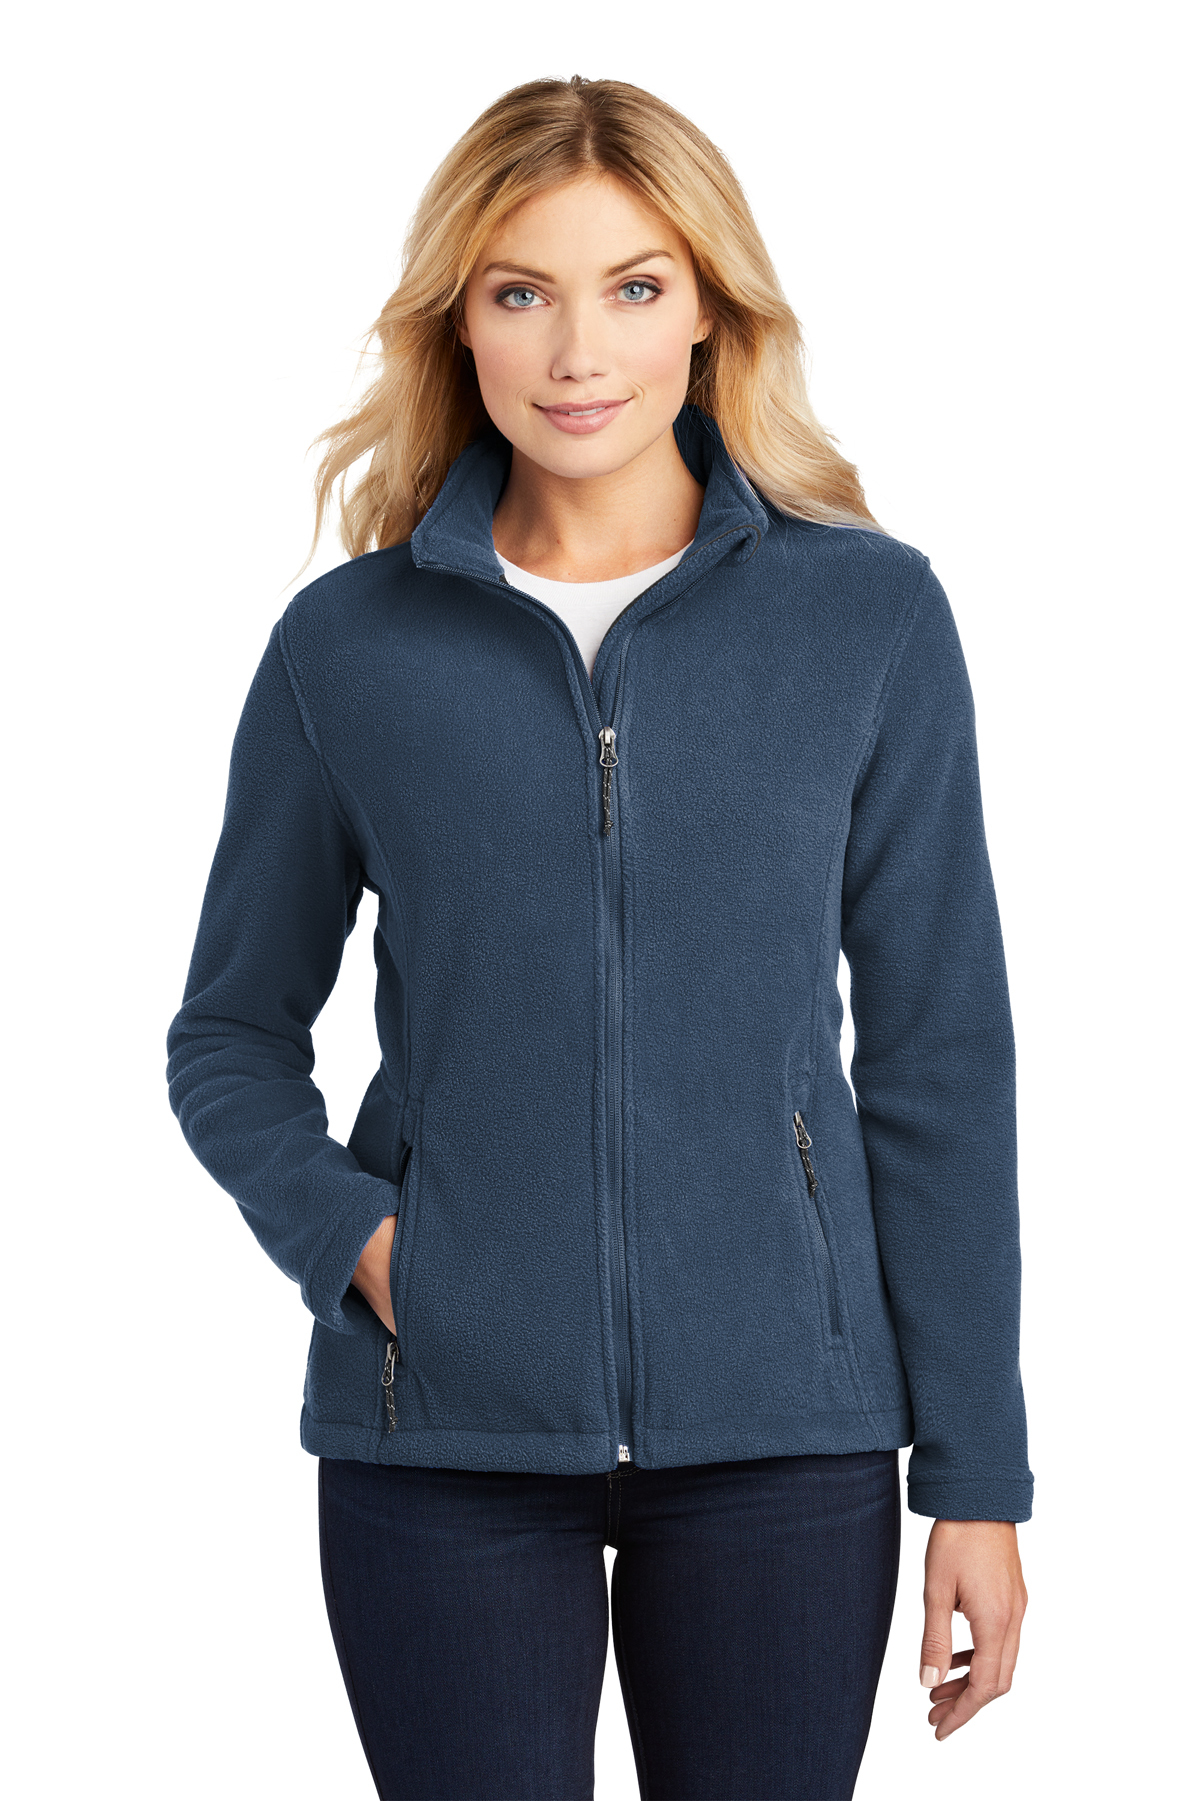 L217: Ladies Value Fleece Jacket by Port Authority - Eagle Media Inc